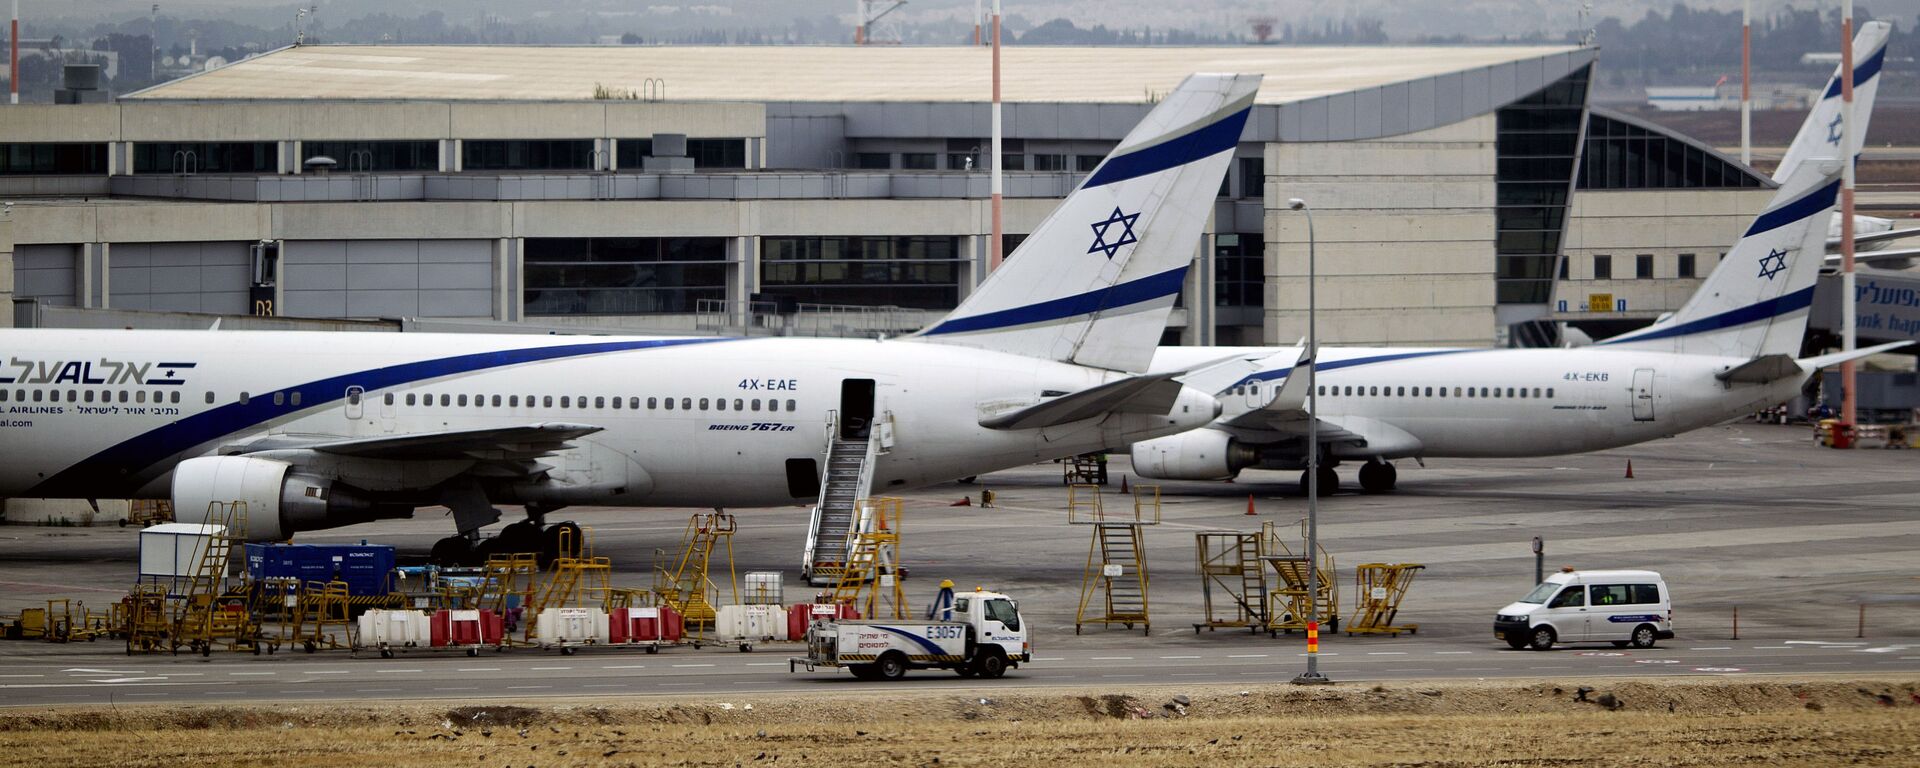 مطار بن غوريون الدولي في تل أبيب، إسرائيل 21 أبريل/ نيسان 2013 - سبوتنيك عربي, 1920, 16.02.2023